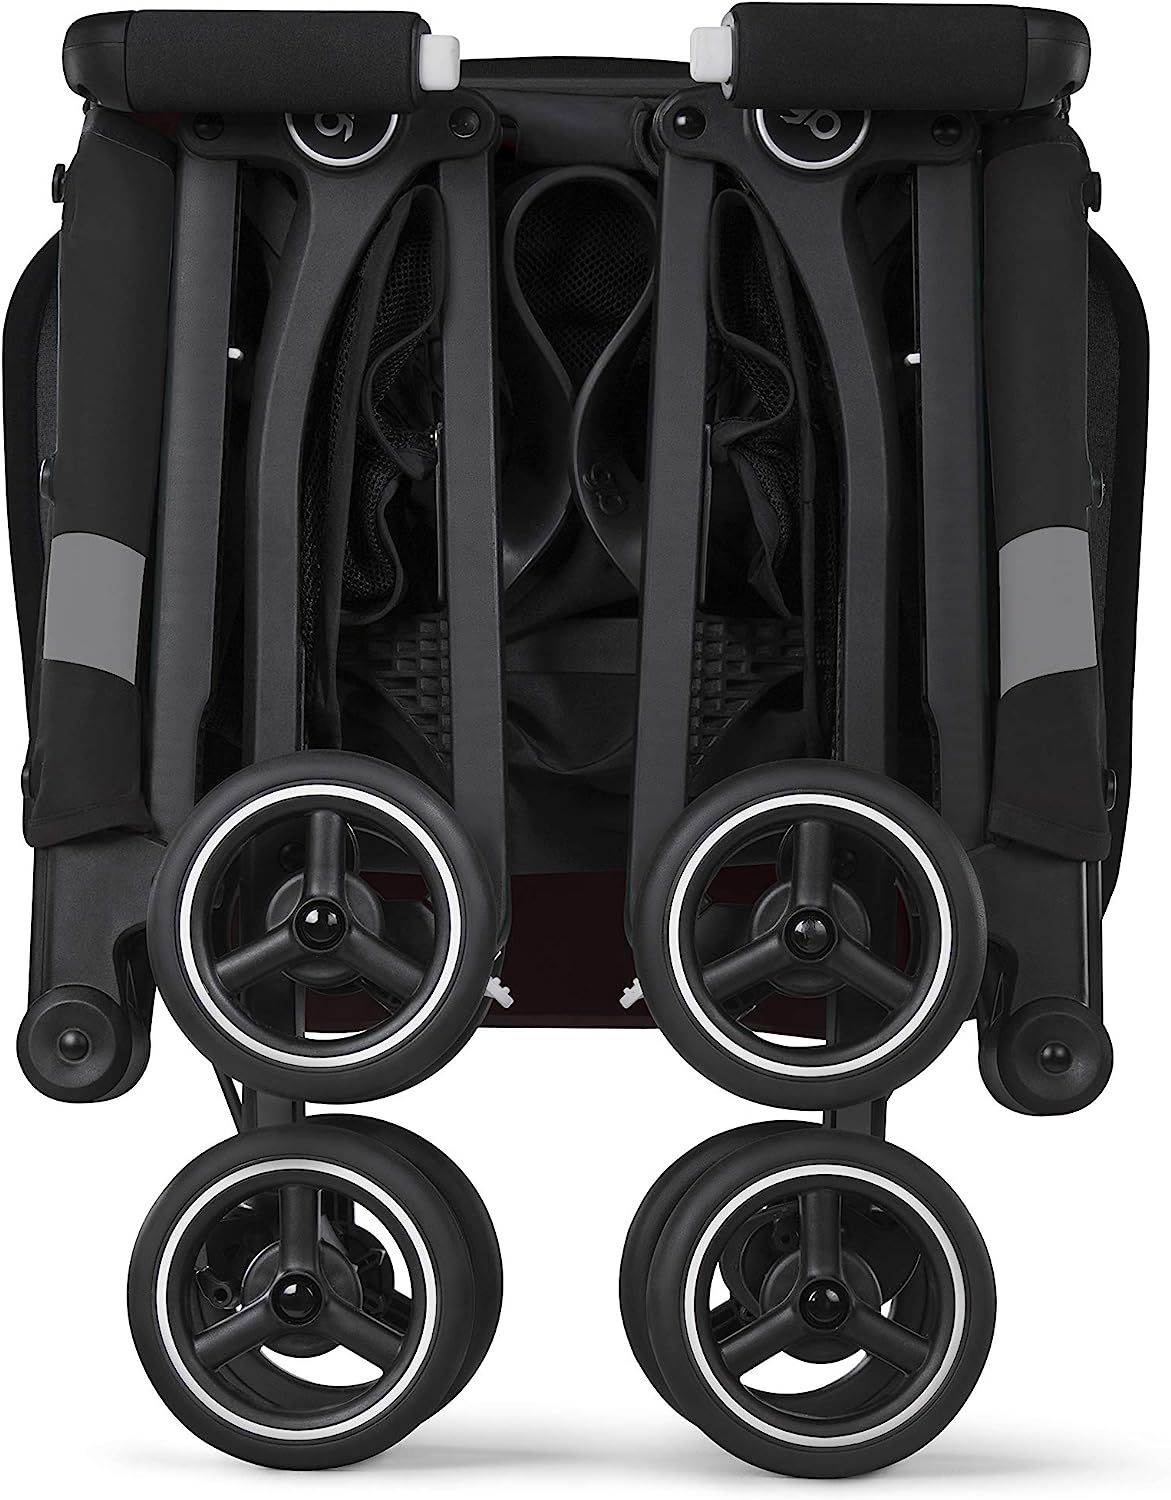 GB Pockit+ All-City Ultra Compact Lightweight Stroller - Velvet Black